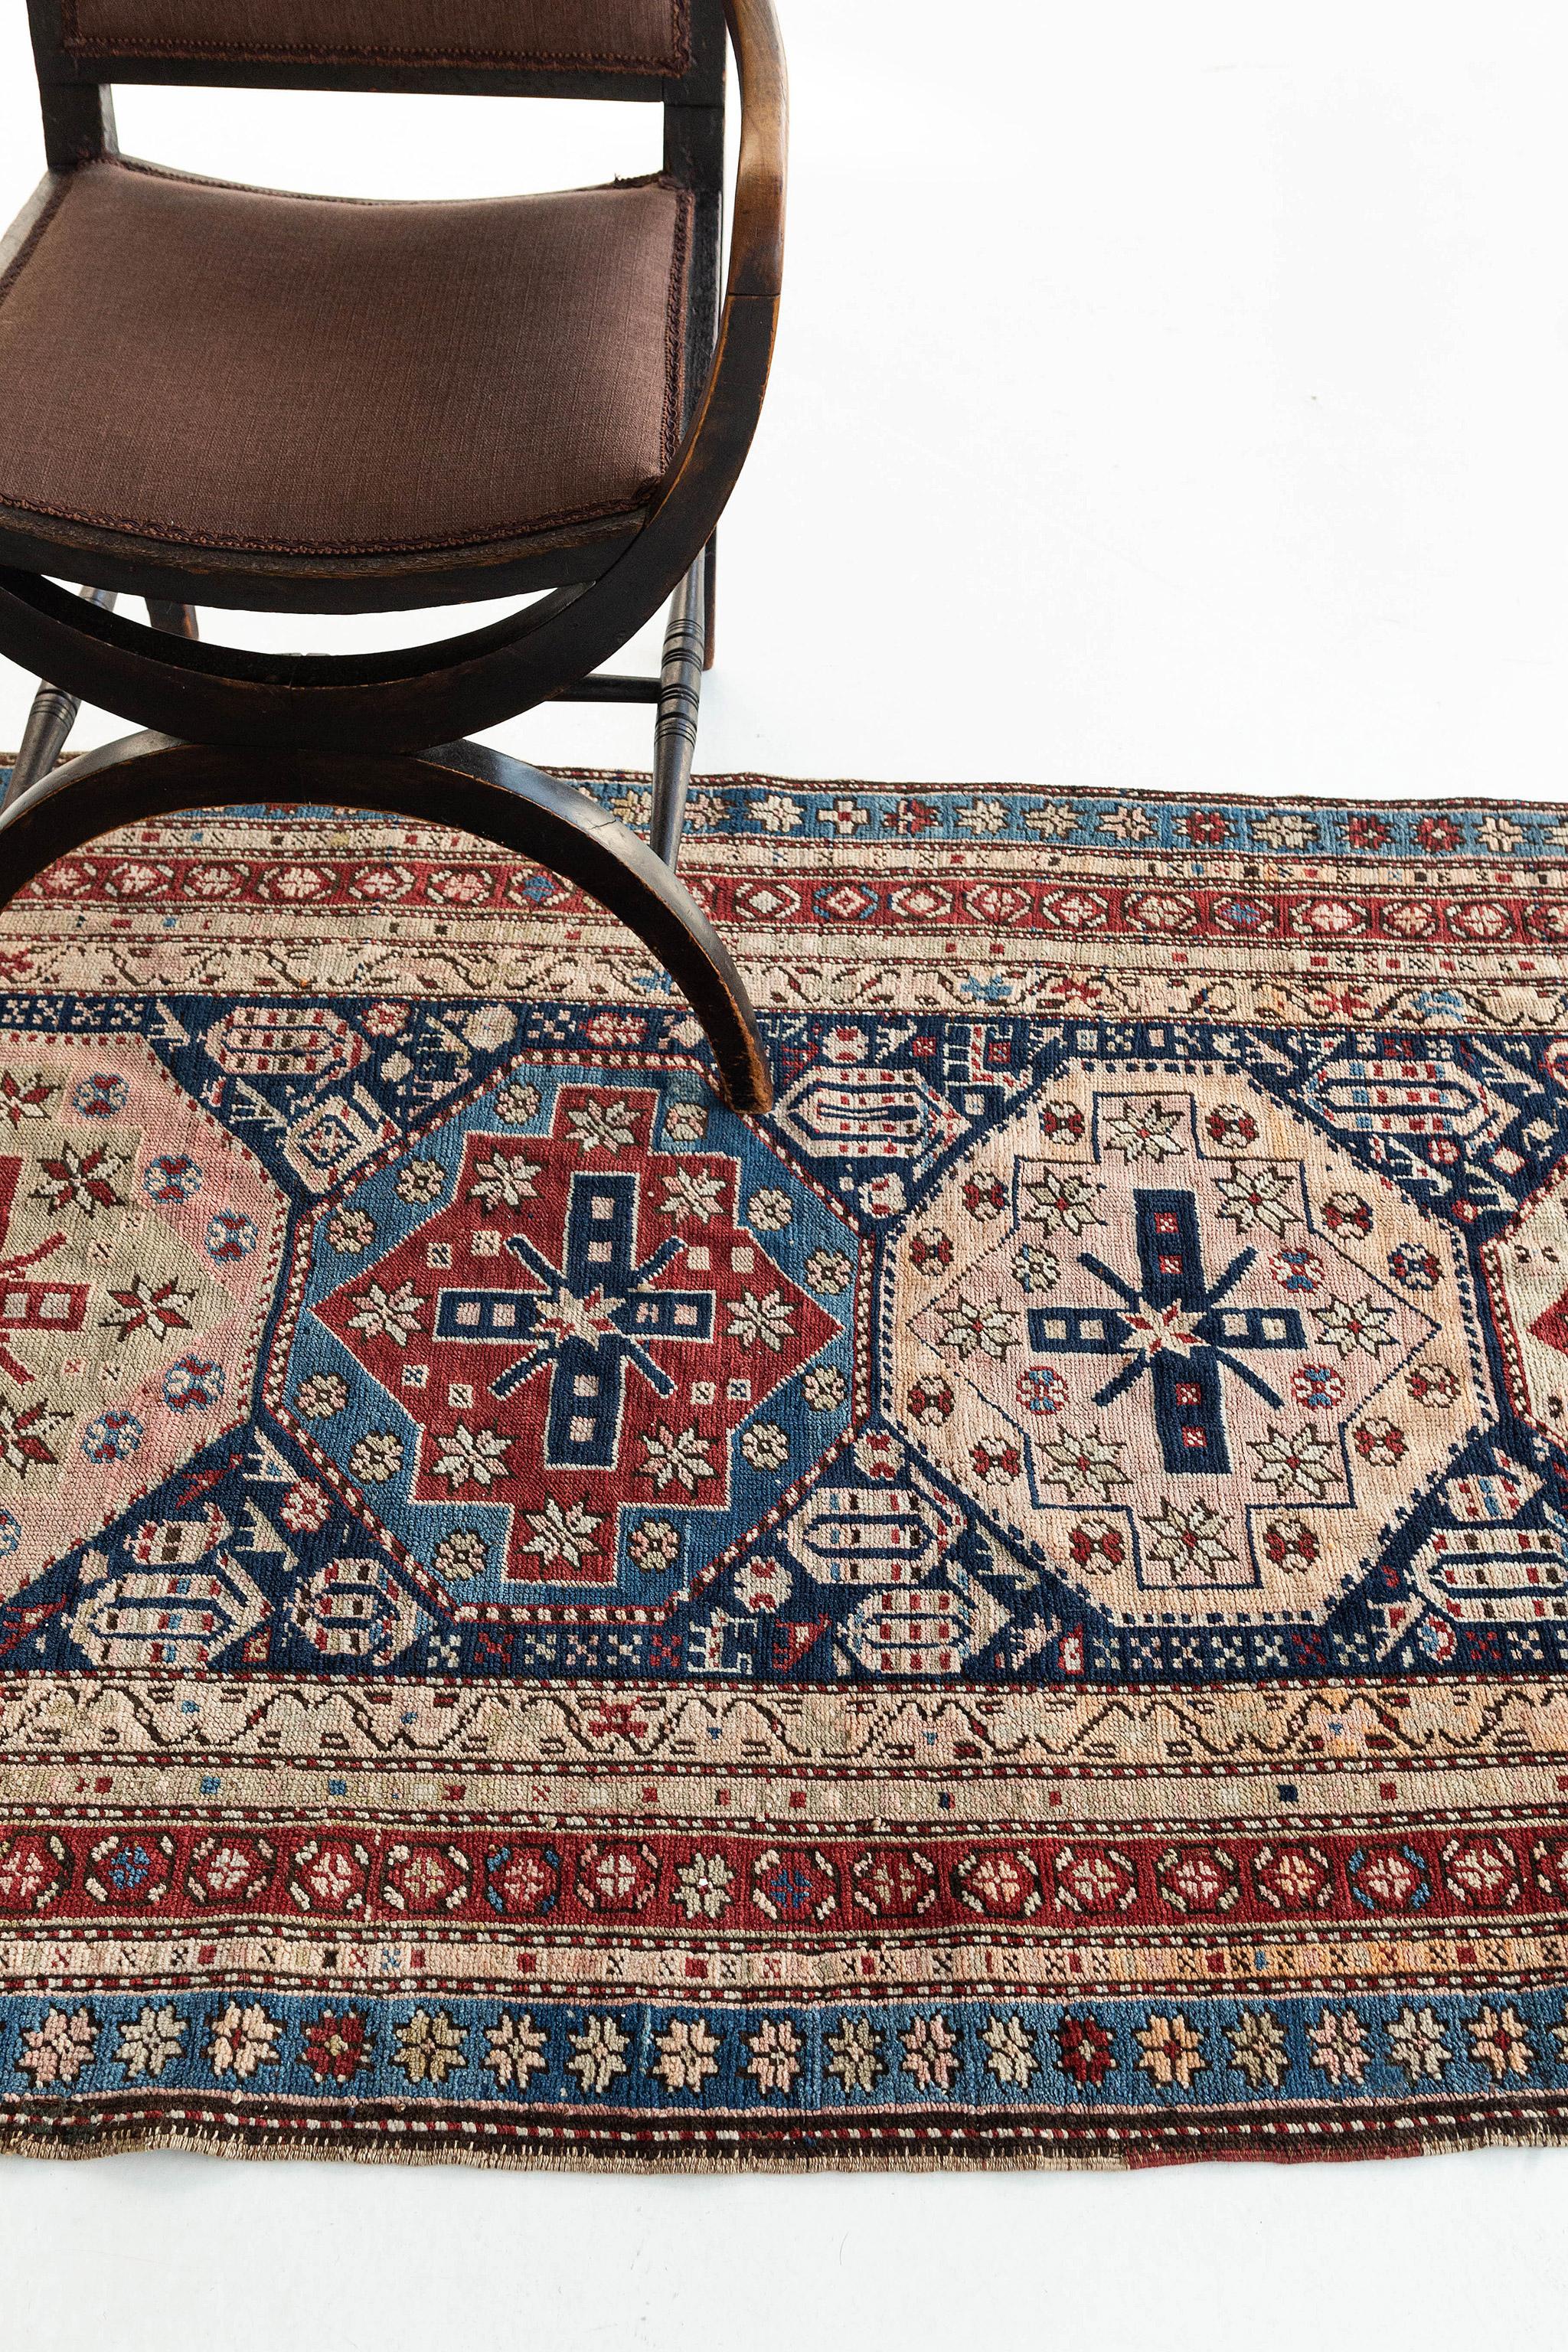 Wool Antique Caucasian Kazak Runner For Sale